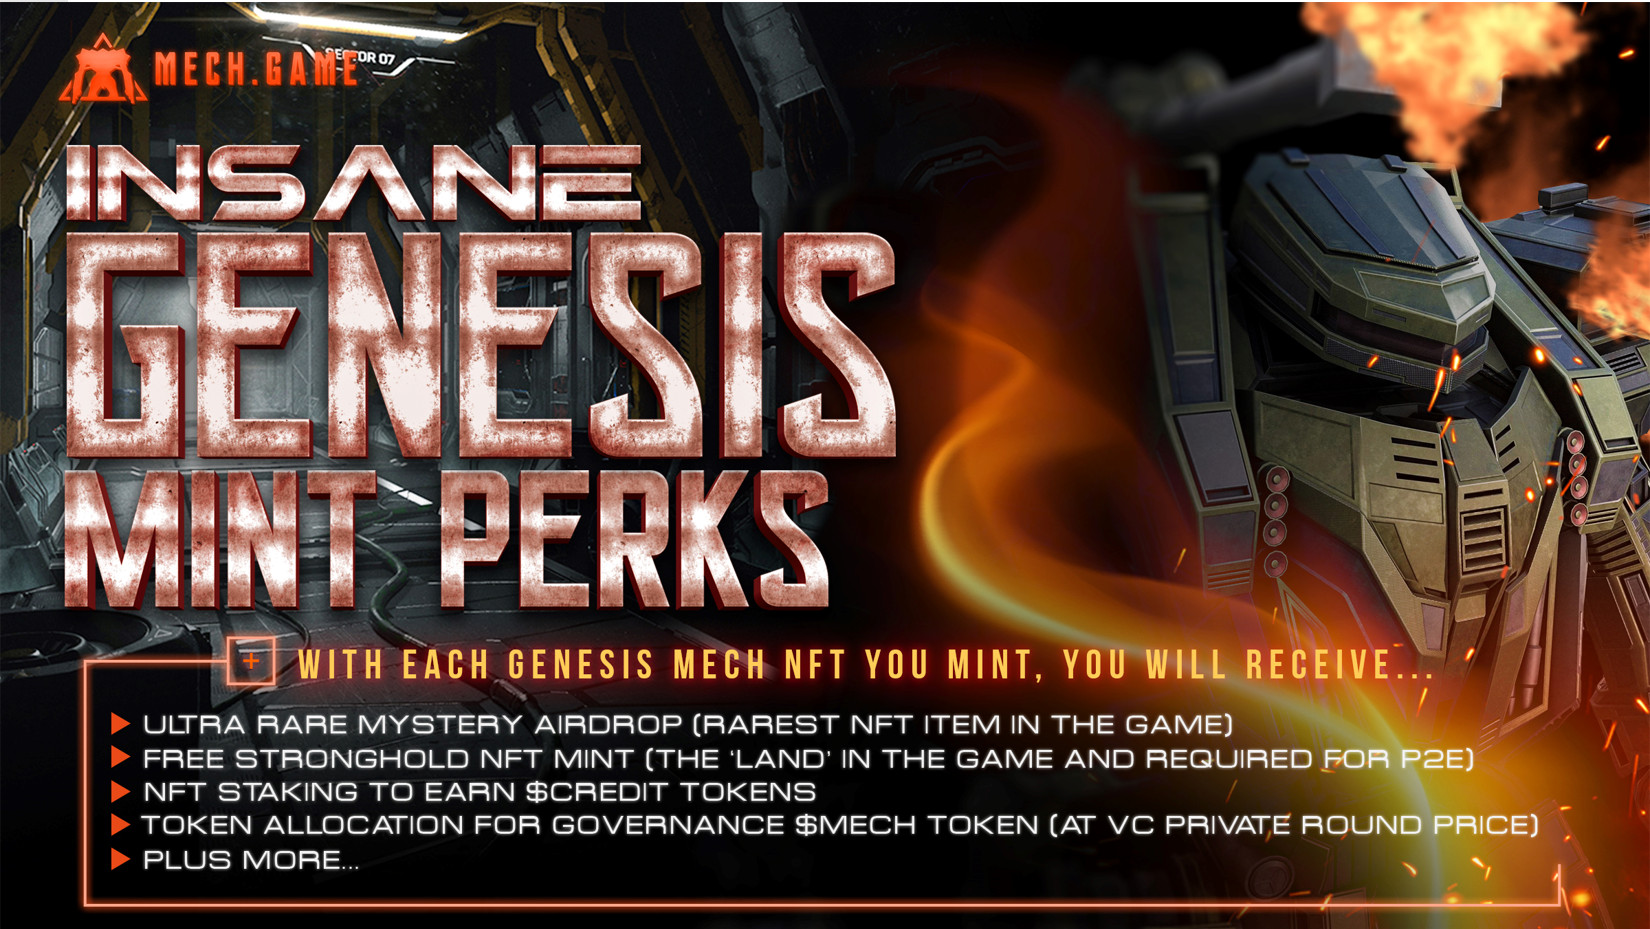 Mech.game Genesis perks